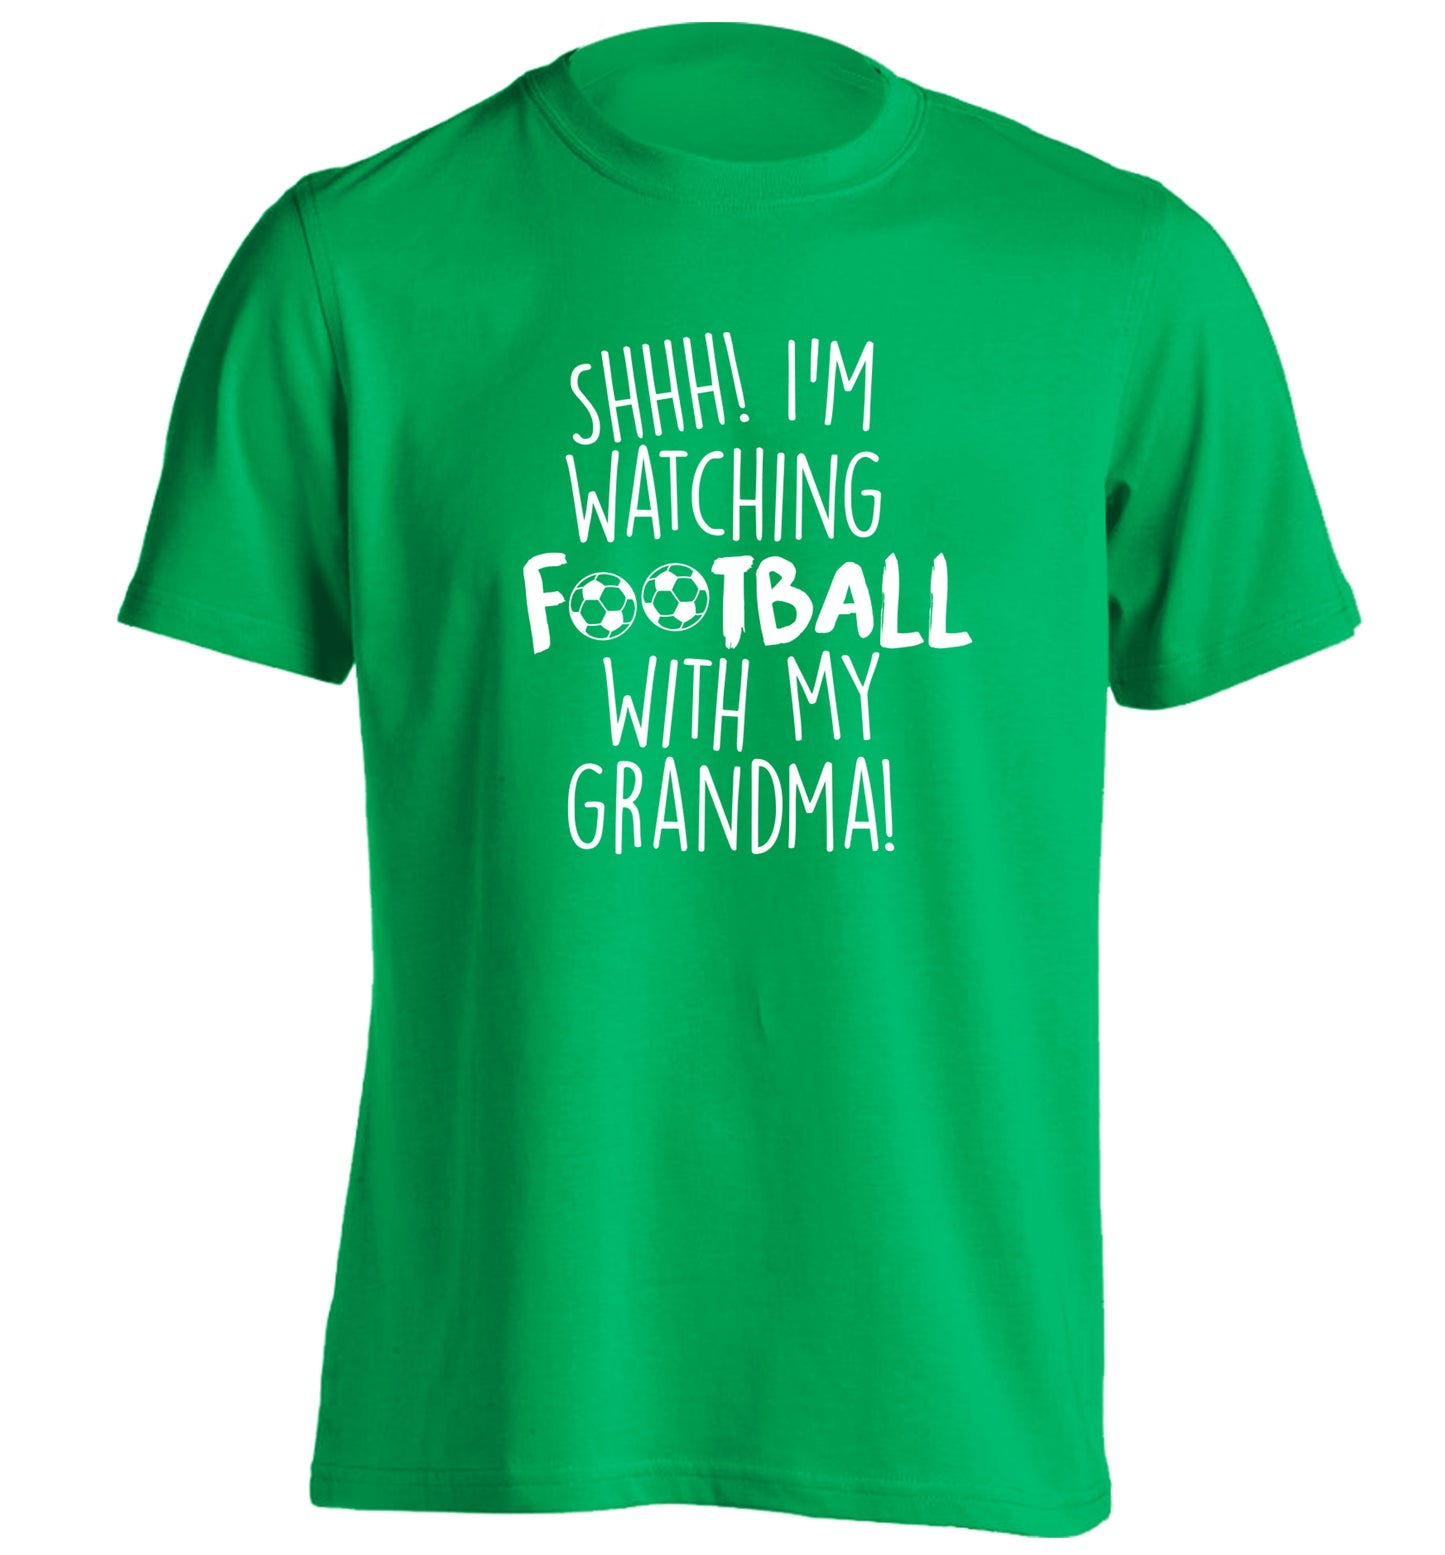 Shhh I'm watching football with my grandma adults unisexgreen Tshirt 2XL